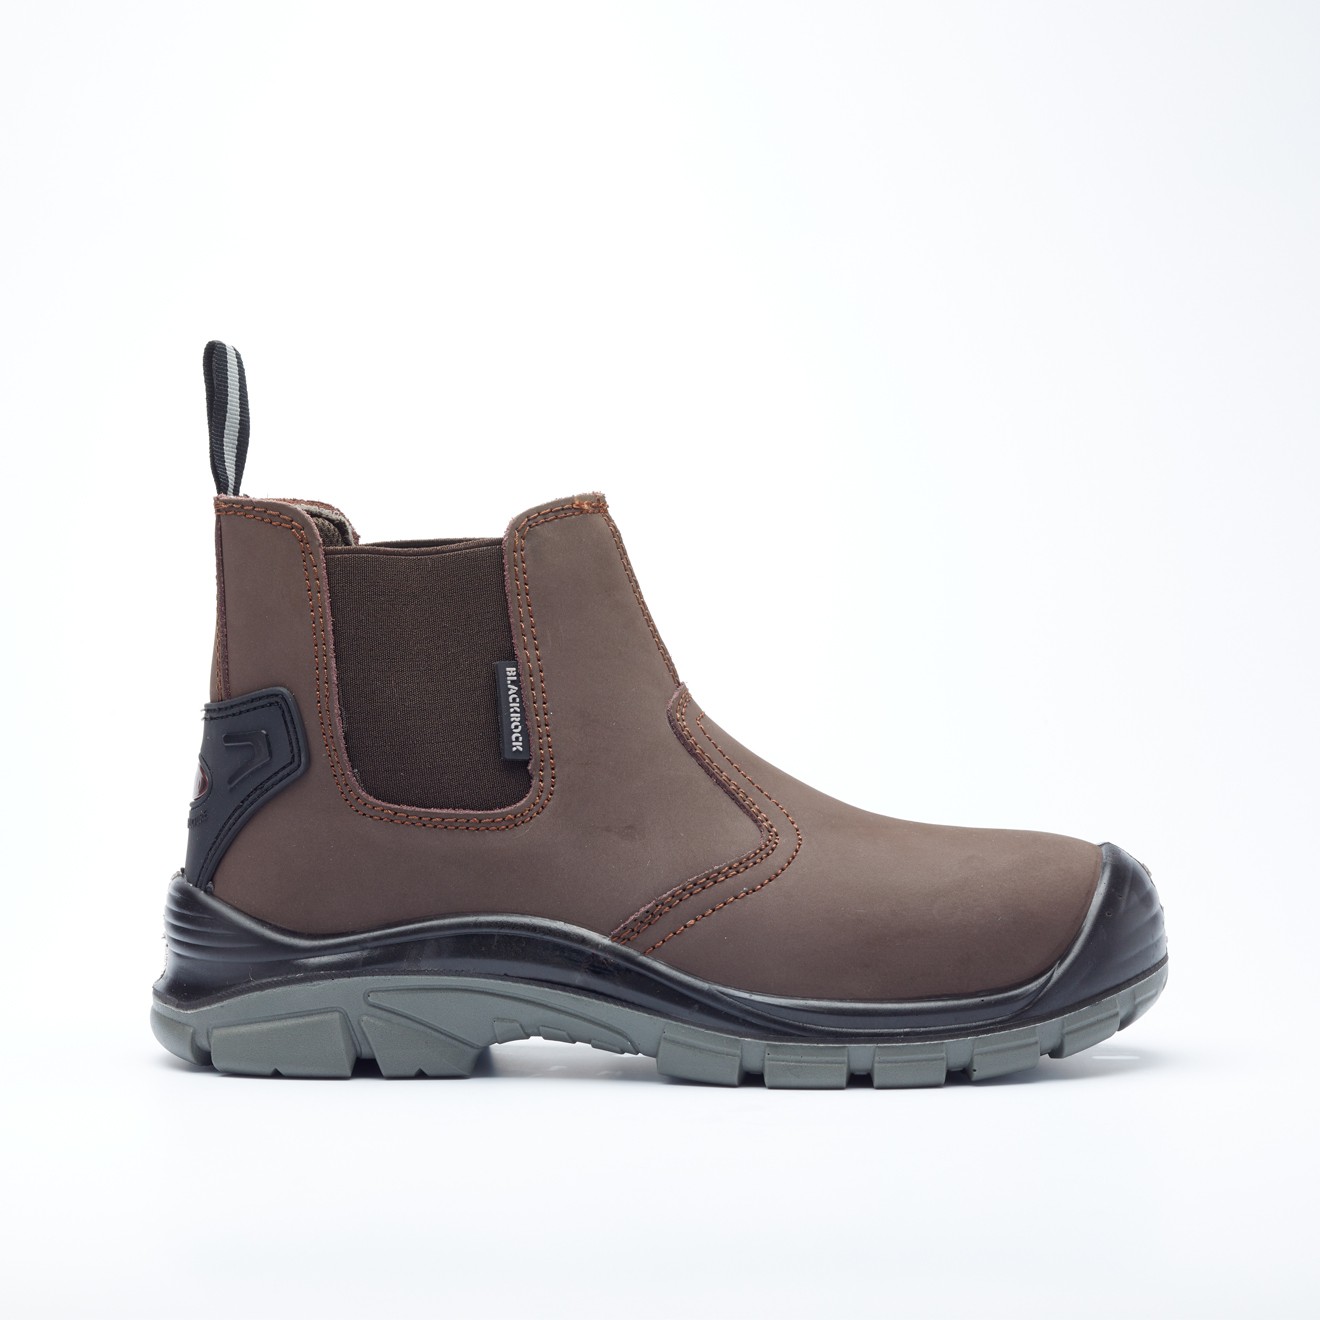 Blackrock Pendle Dealer Safety Work Boots Composite Toe & Mid Water Resist CF15 